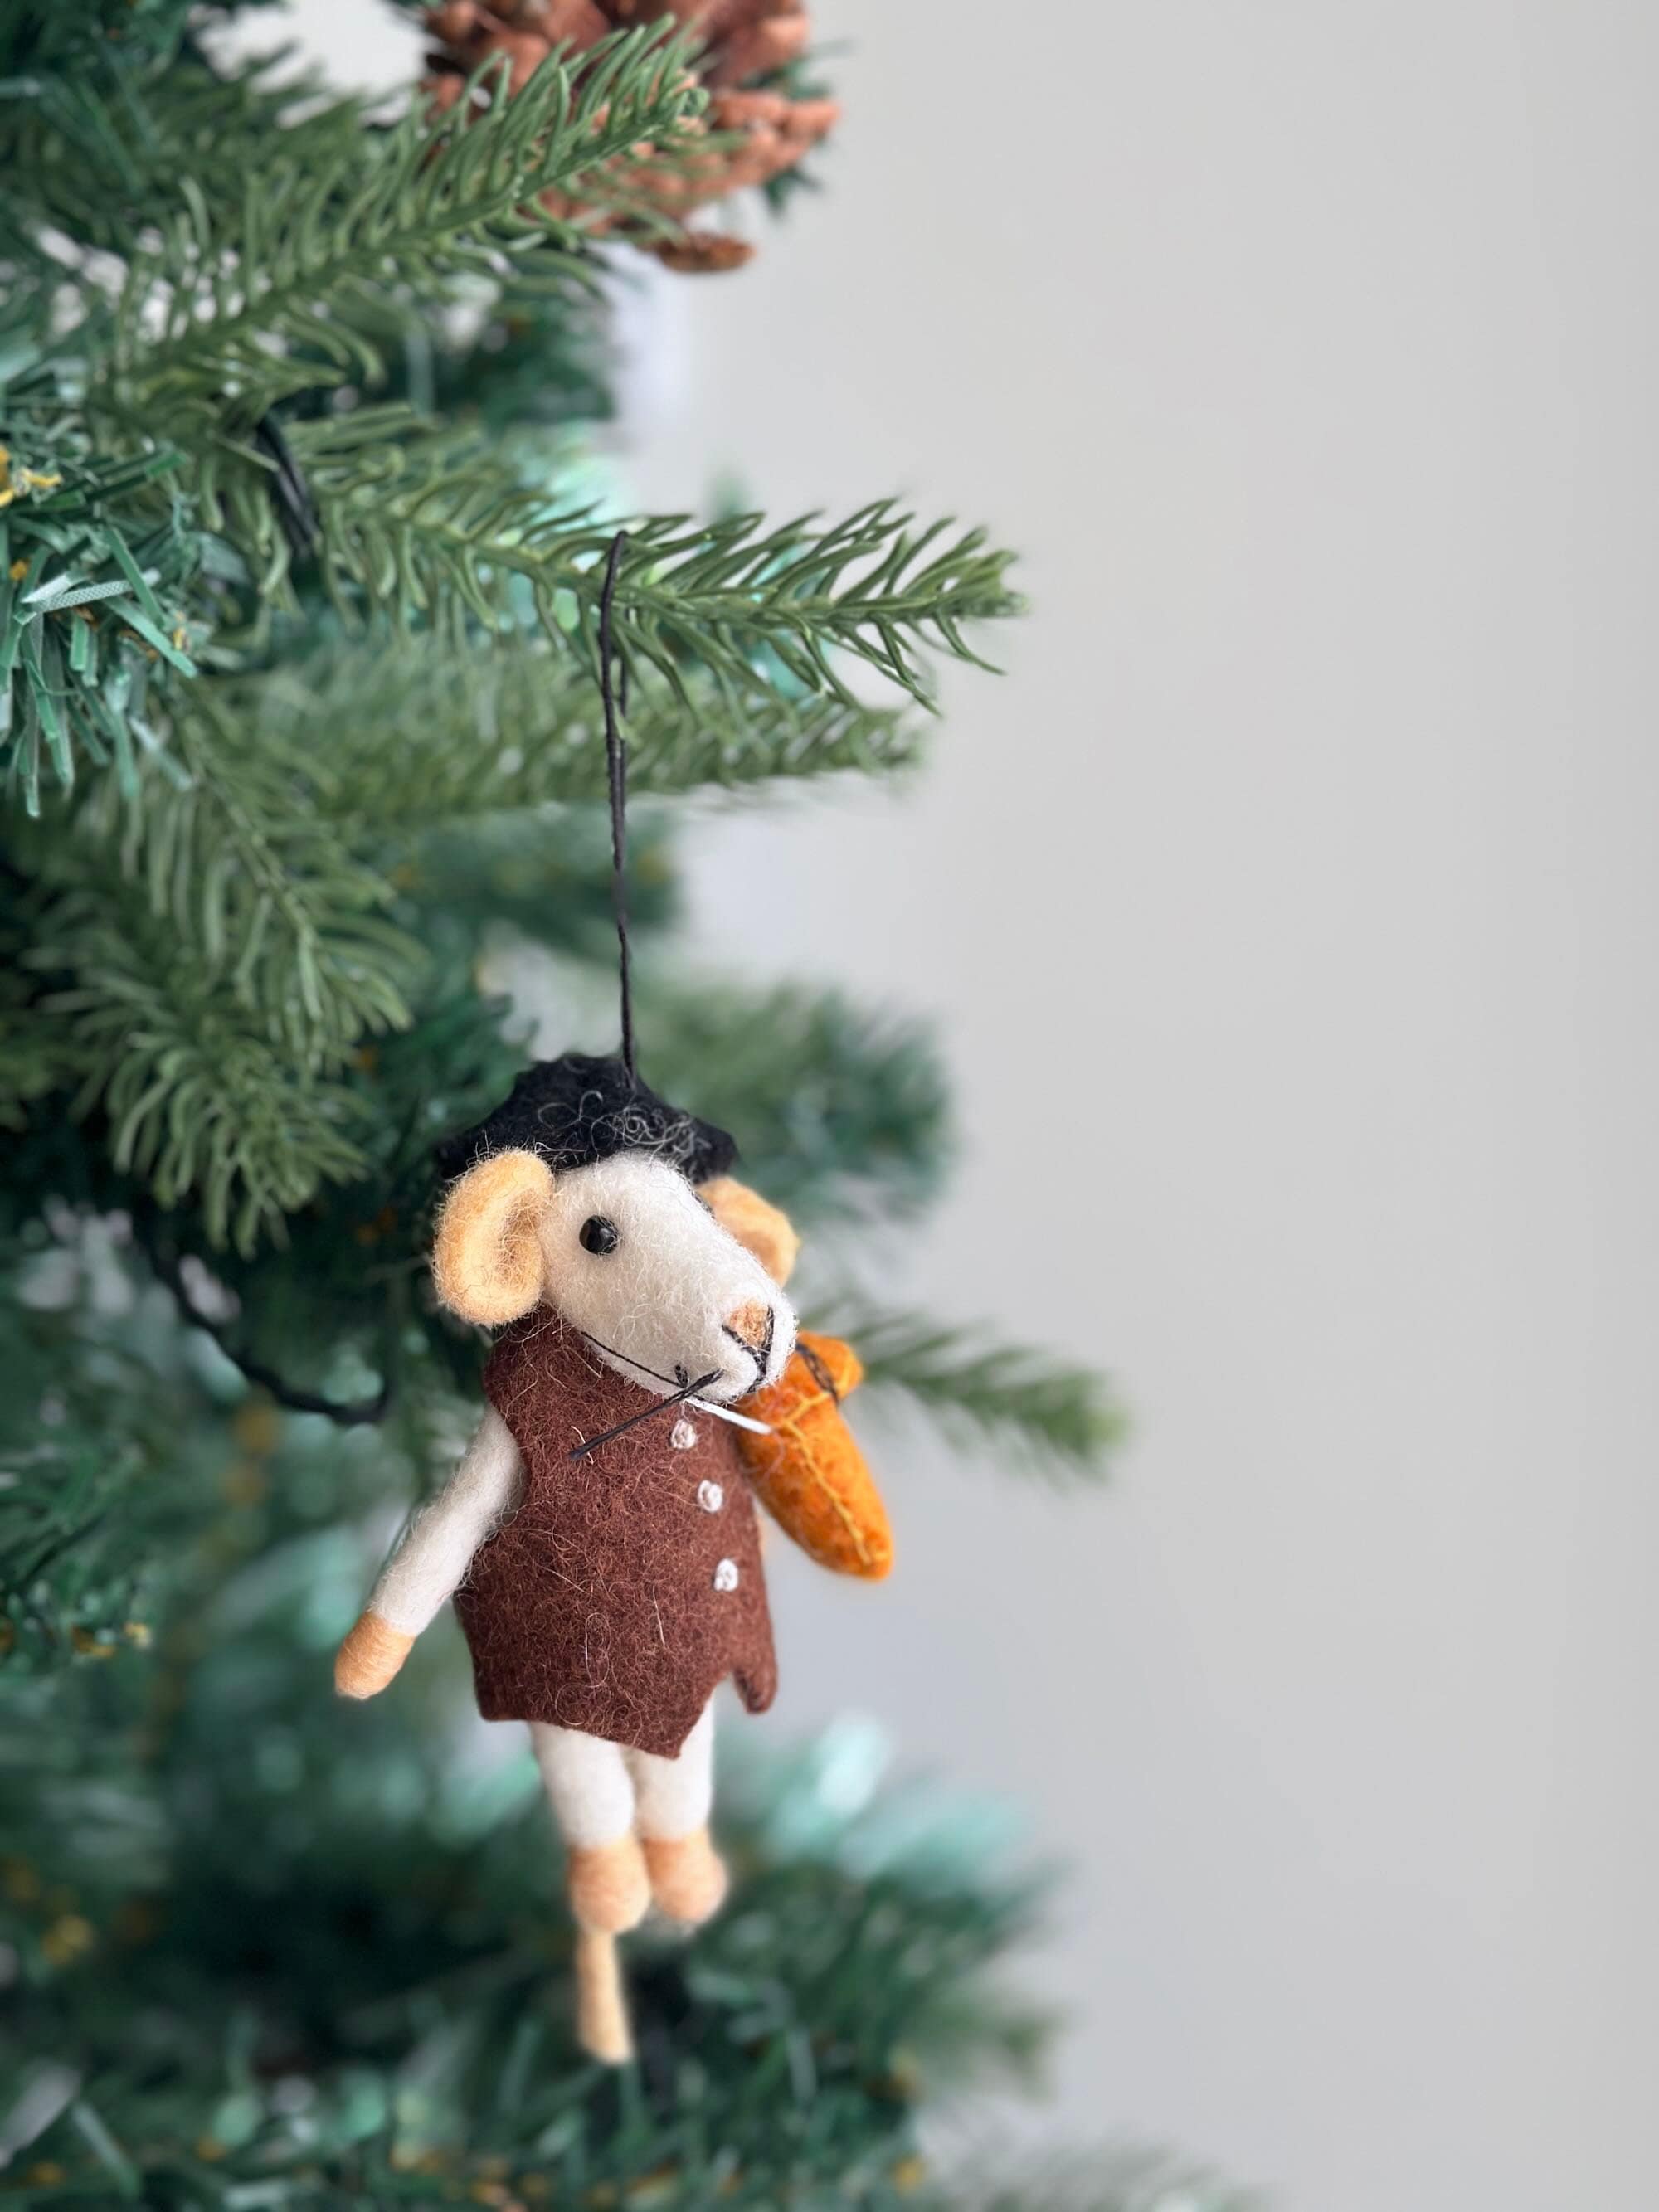 Vtg Handmade Felt Mice Mouse Christmas Ornaments Bride And Groom 3” Wedding